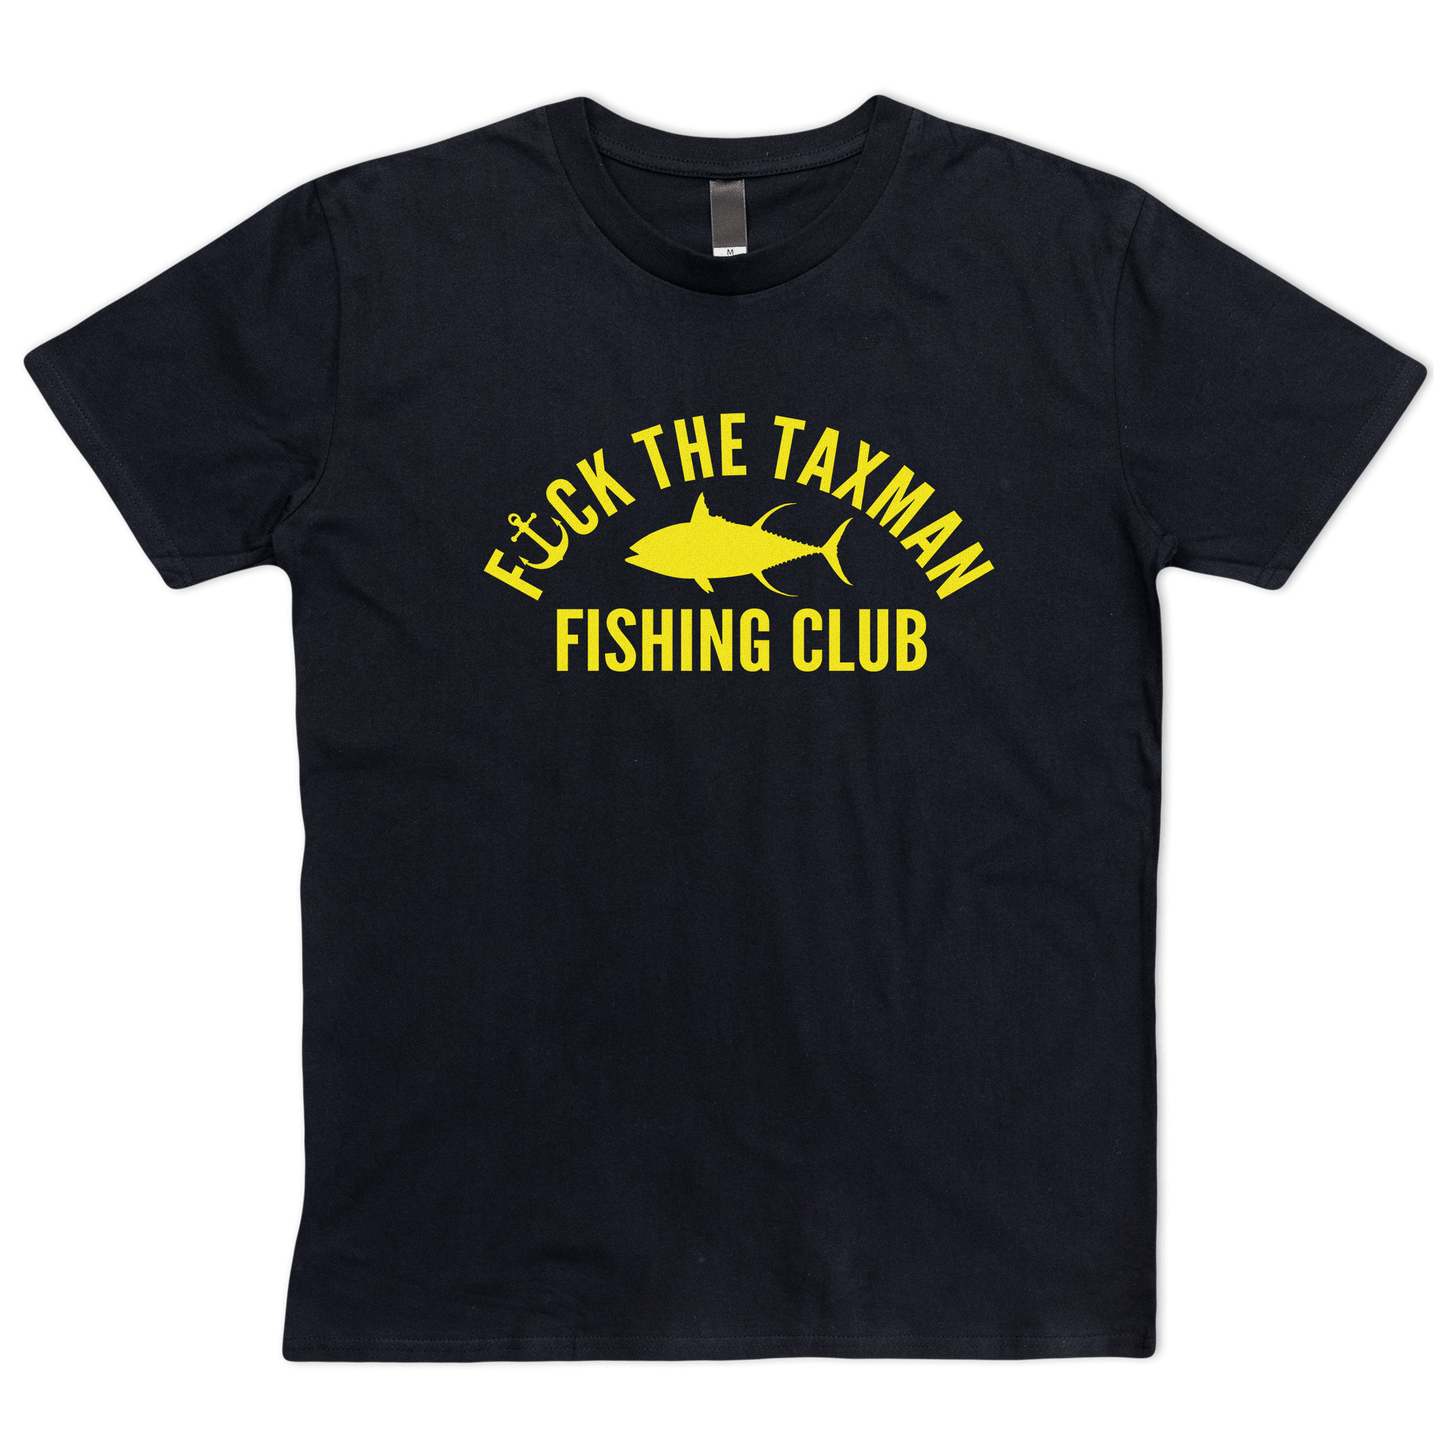 FTTM FISHING CLUB Tee